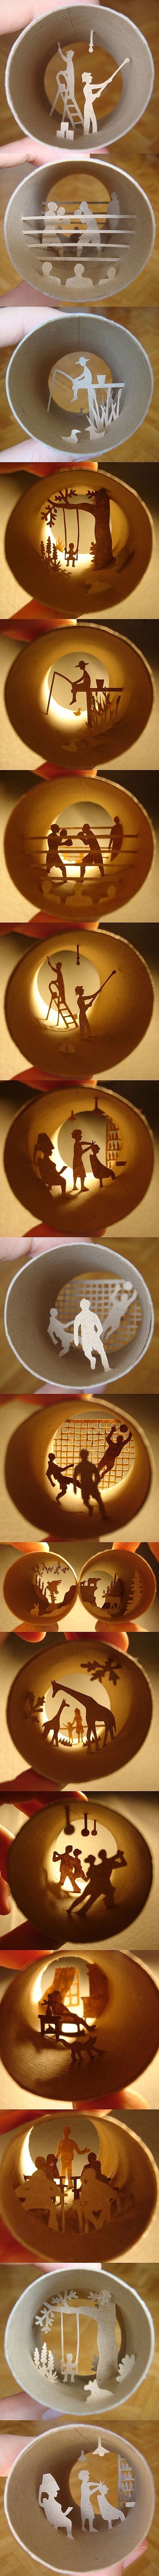 amazing-toilet-paper-crafts